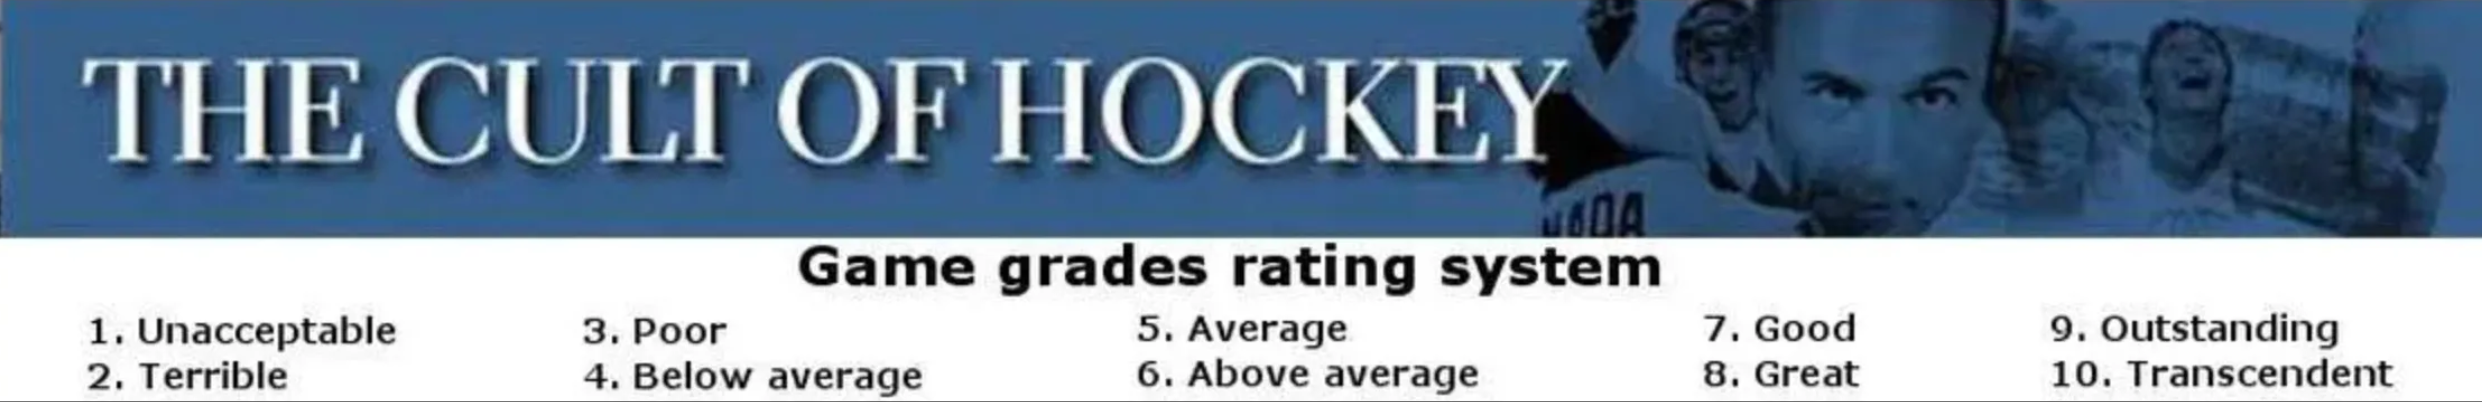 Cult of Hockey game grades player grades